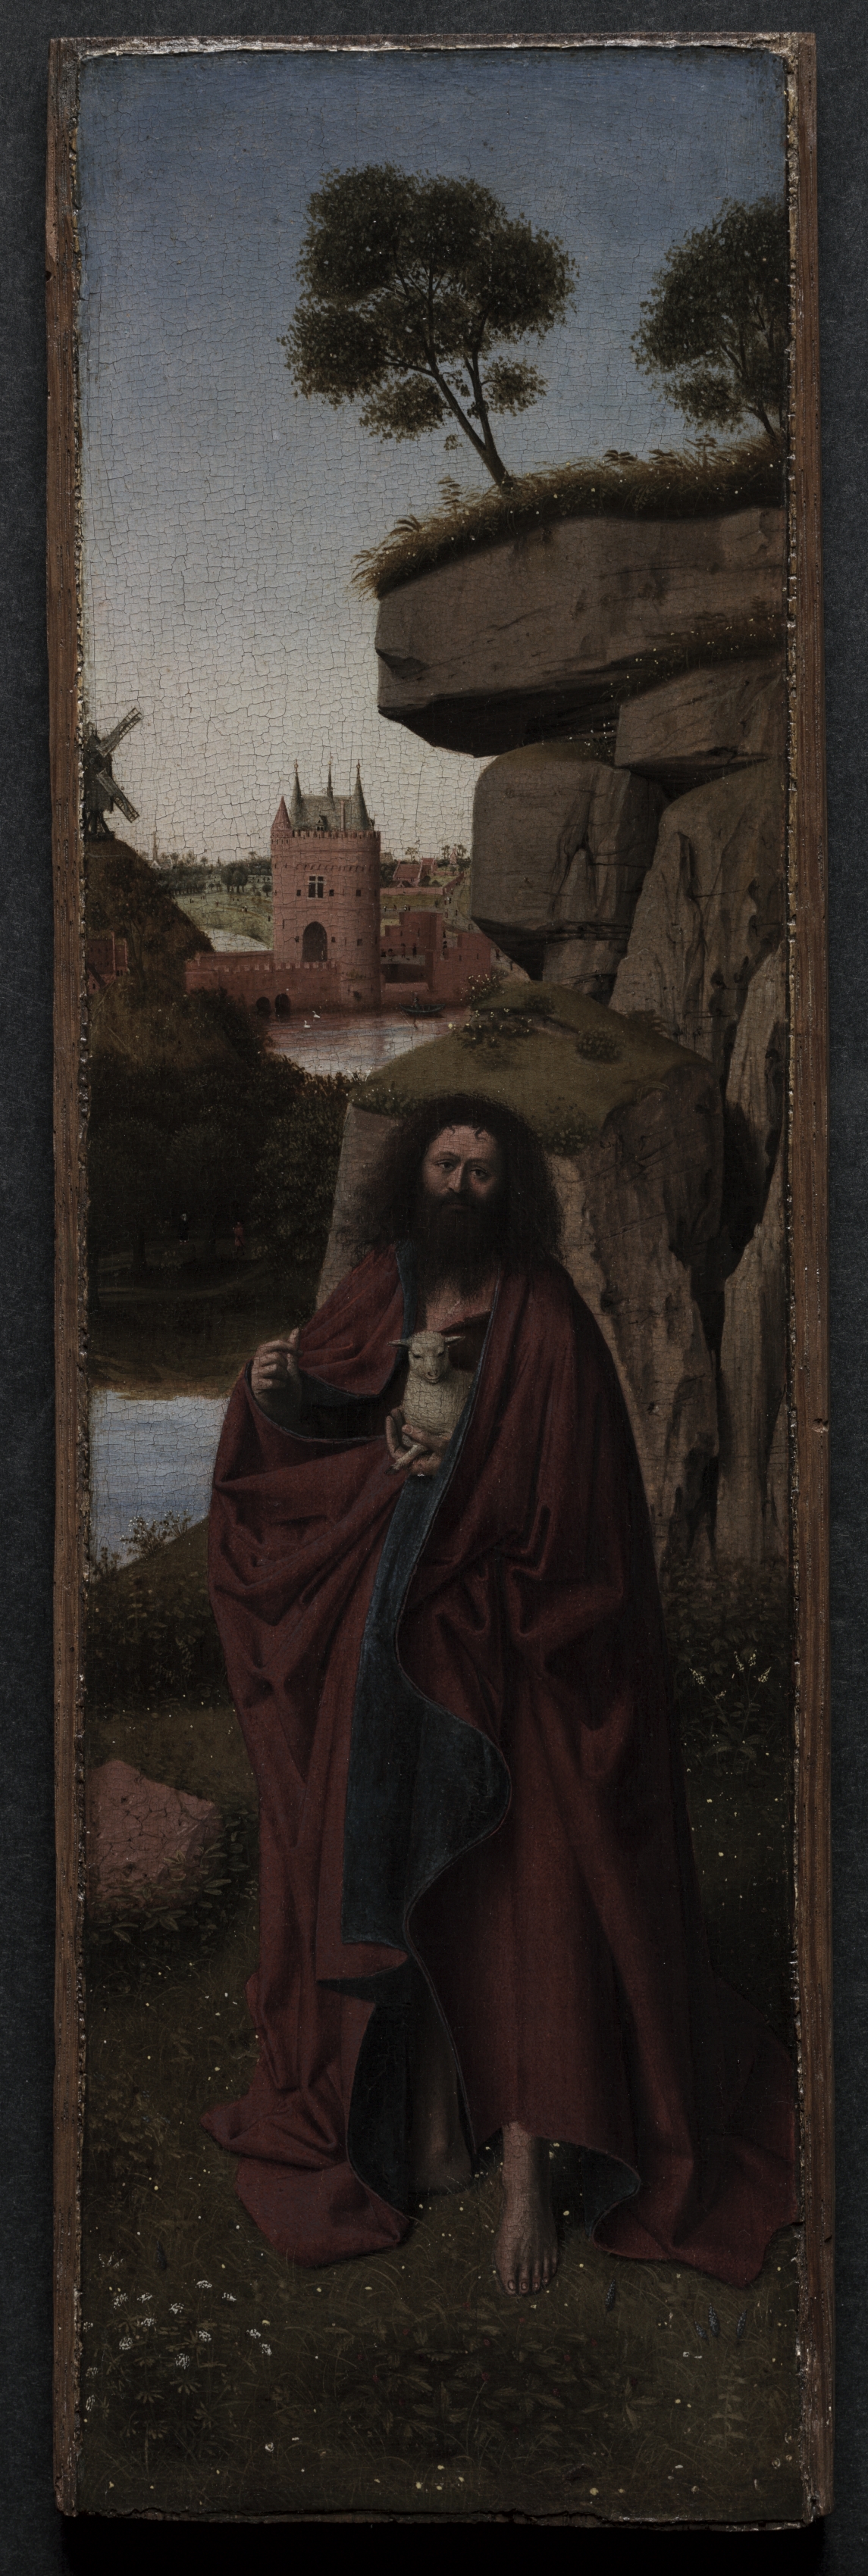 Saint John the Baptist in a Landscape